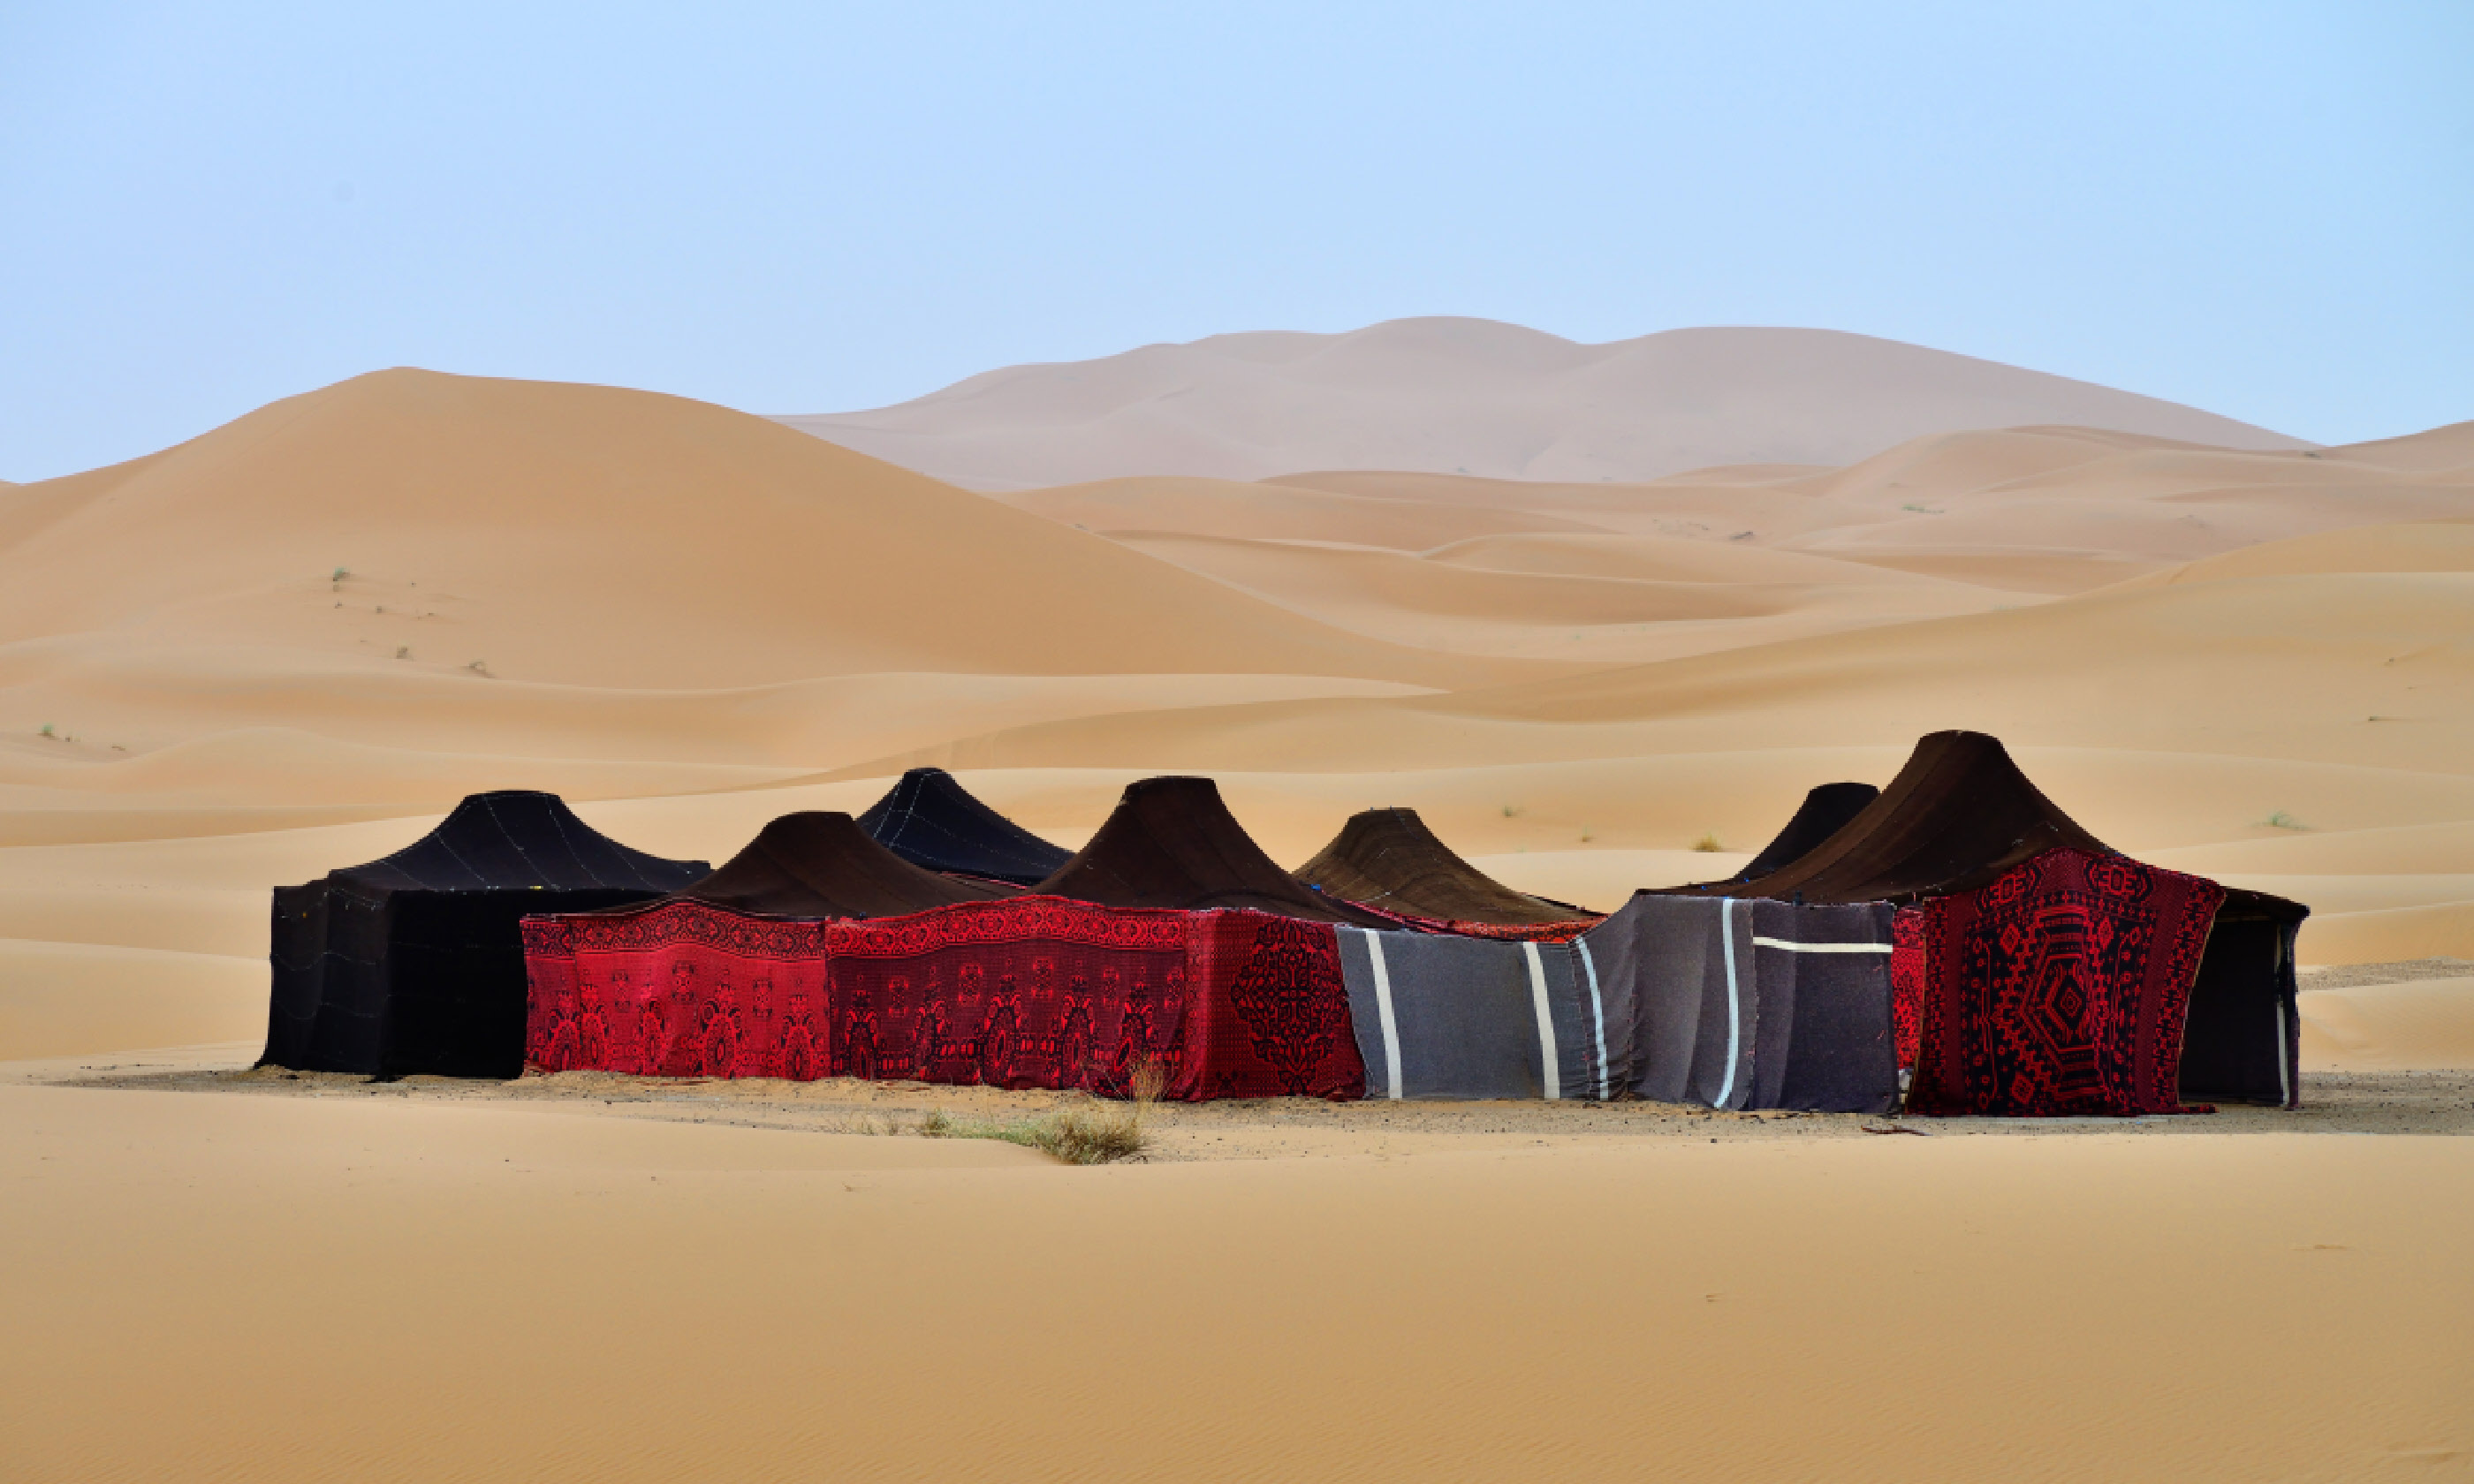 Berber tents in the Sahara, Morocco (Shutterstock)